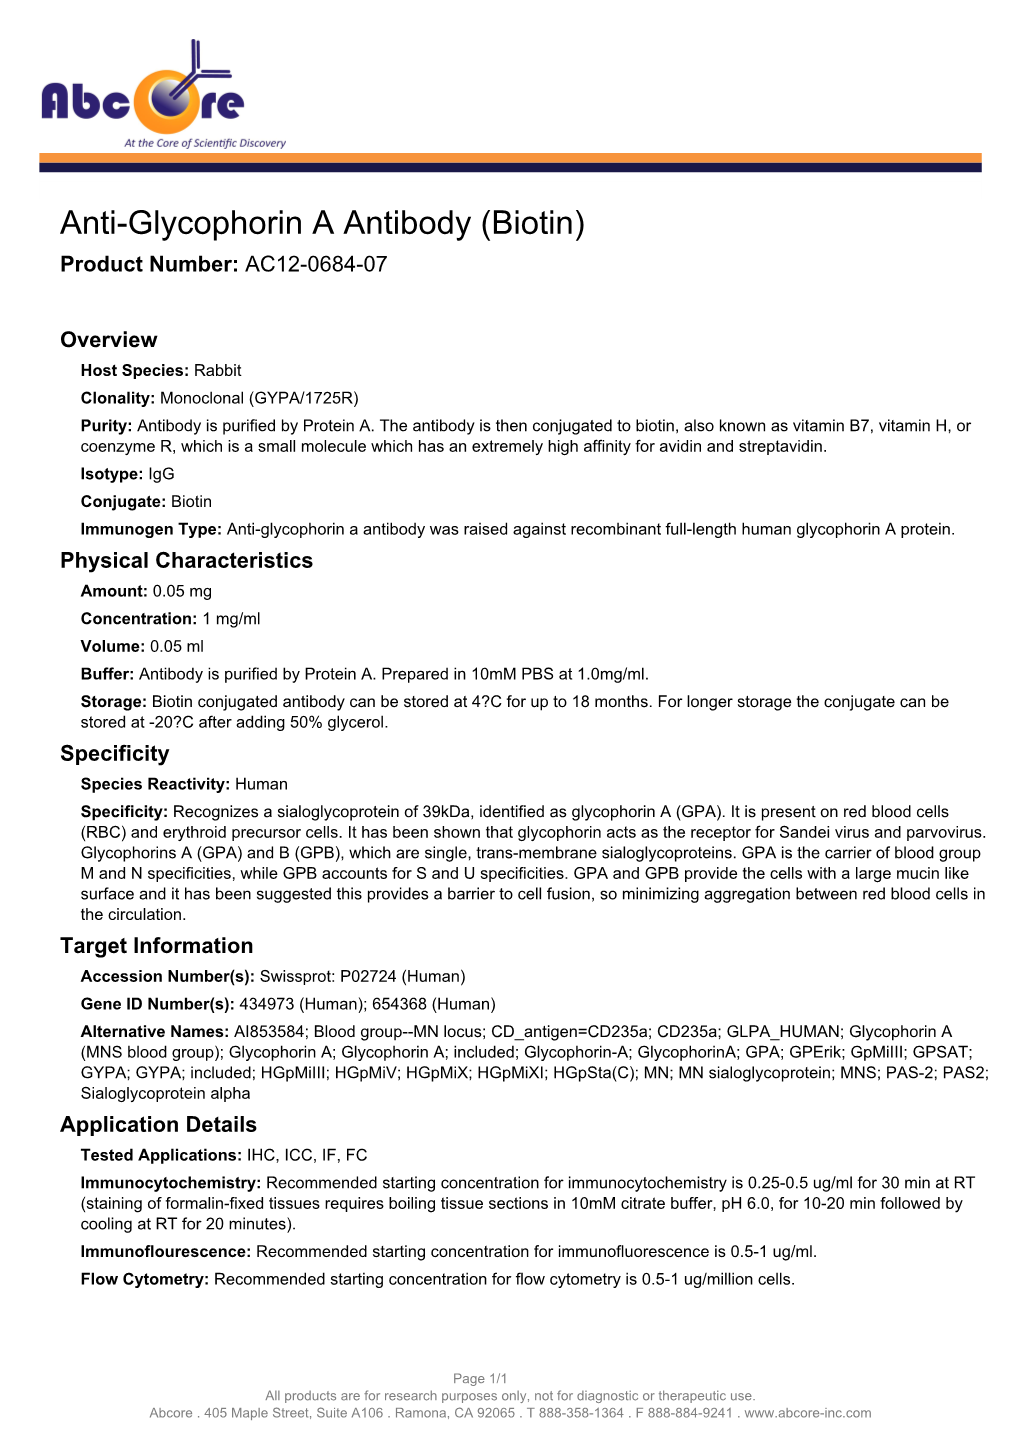 Anti-Glycophorin a Antibody (Biotin) Product Number: AC12-0684-07